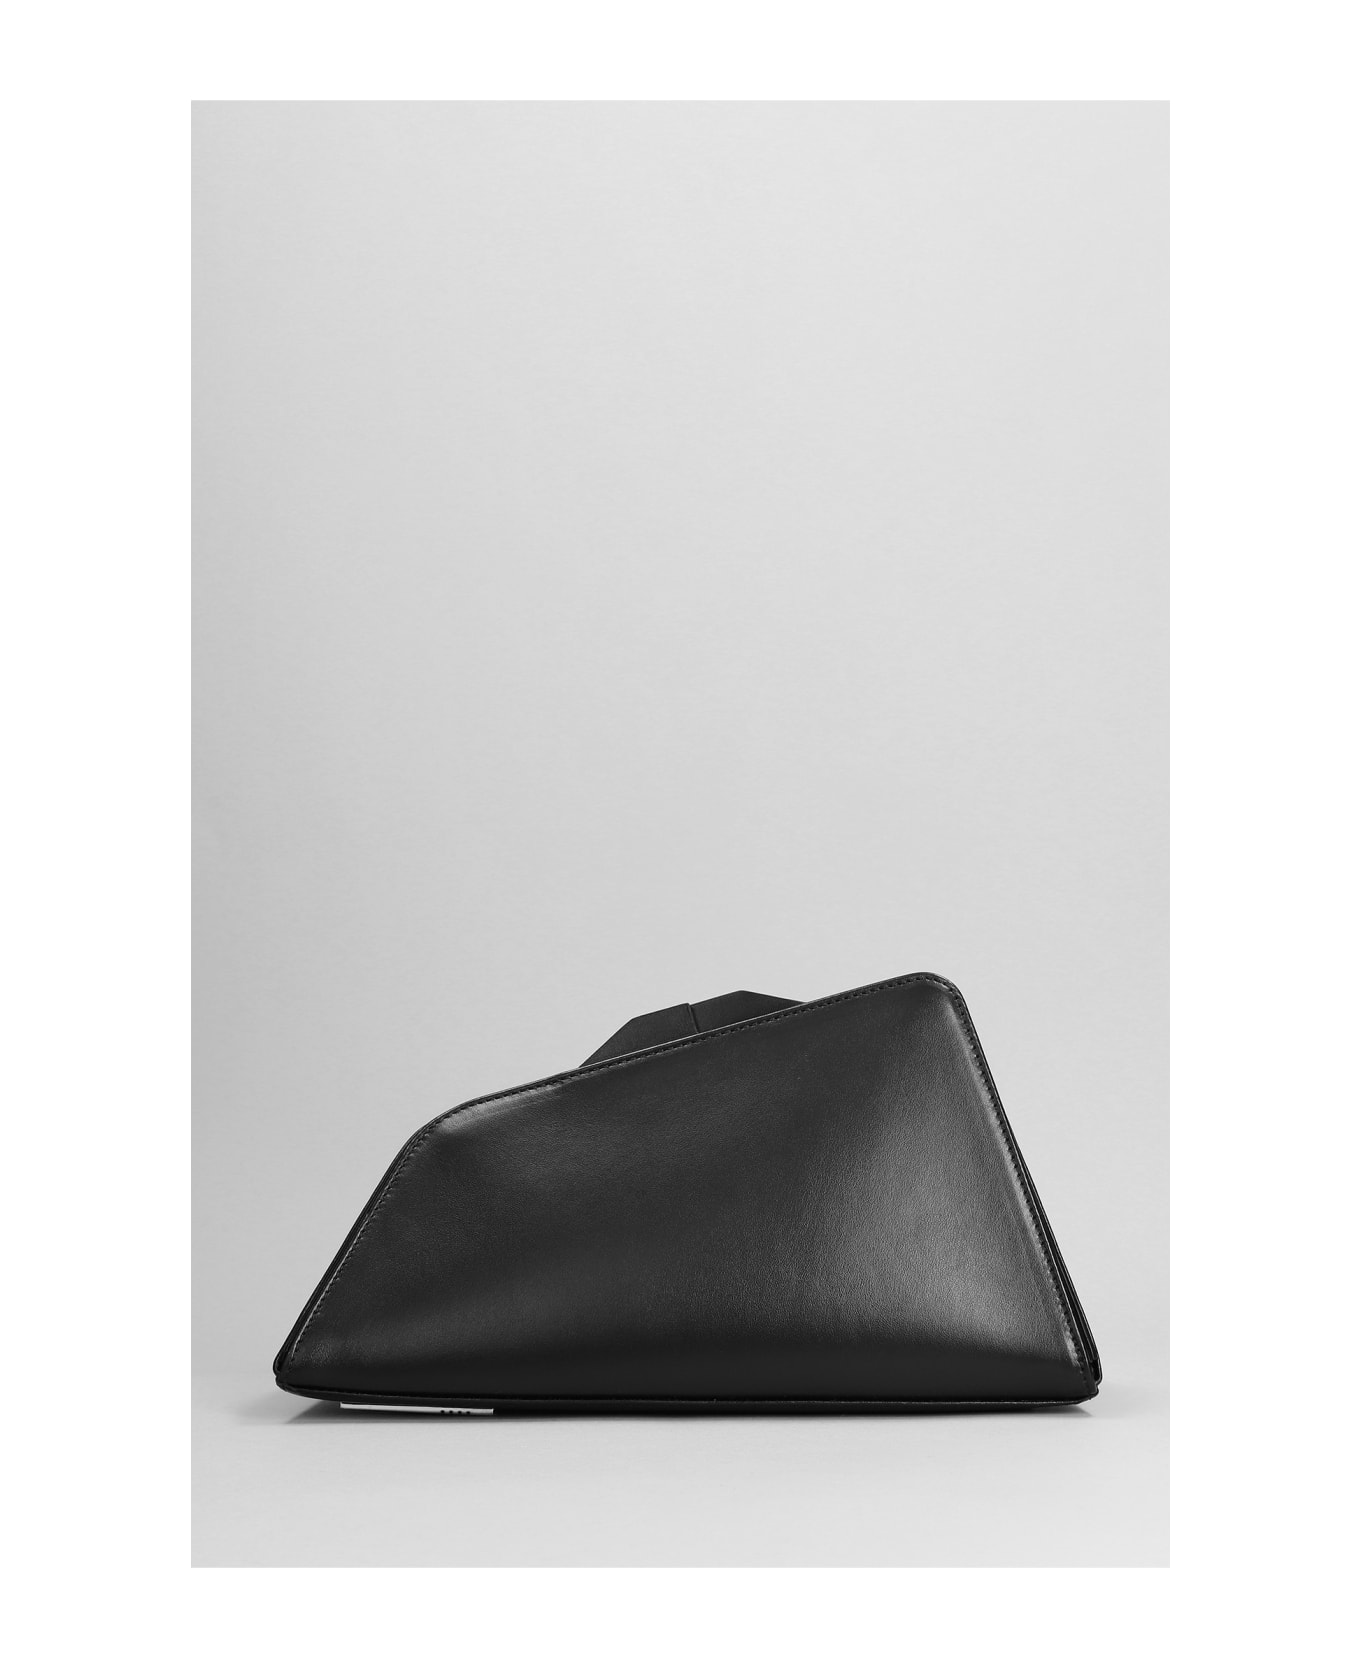 The Attico 8.30 Pm Hand Bag In Black Leather - Black クラッチバッグ